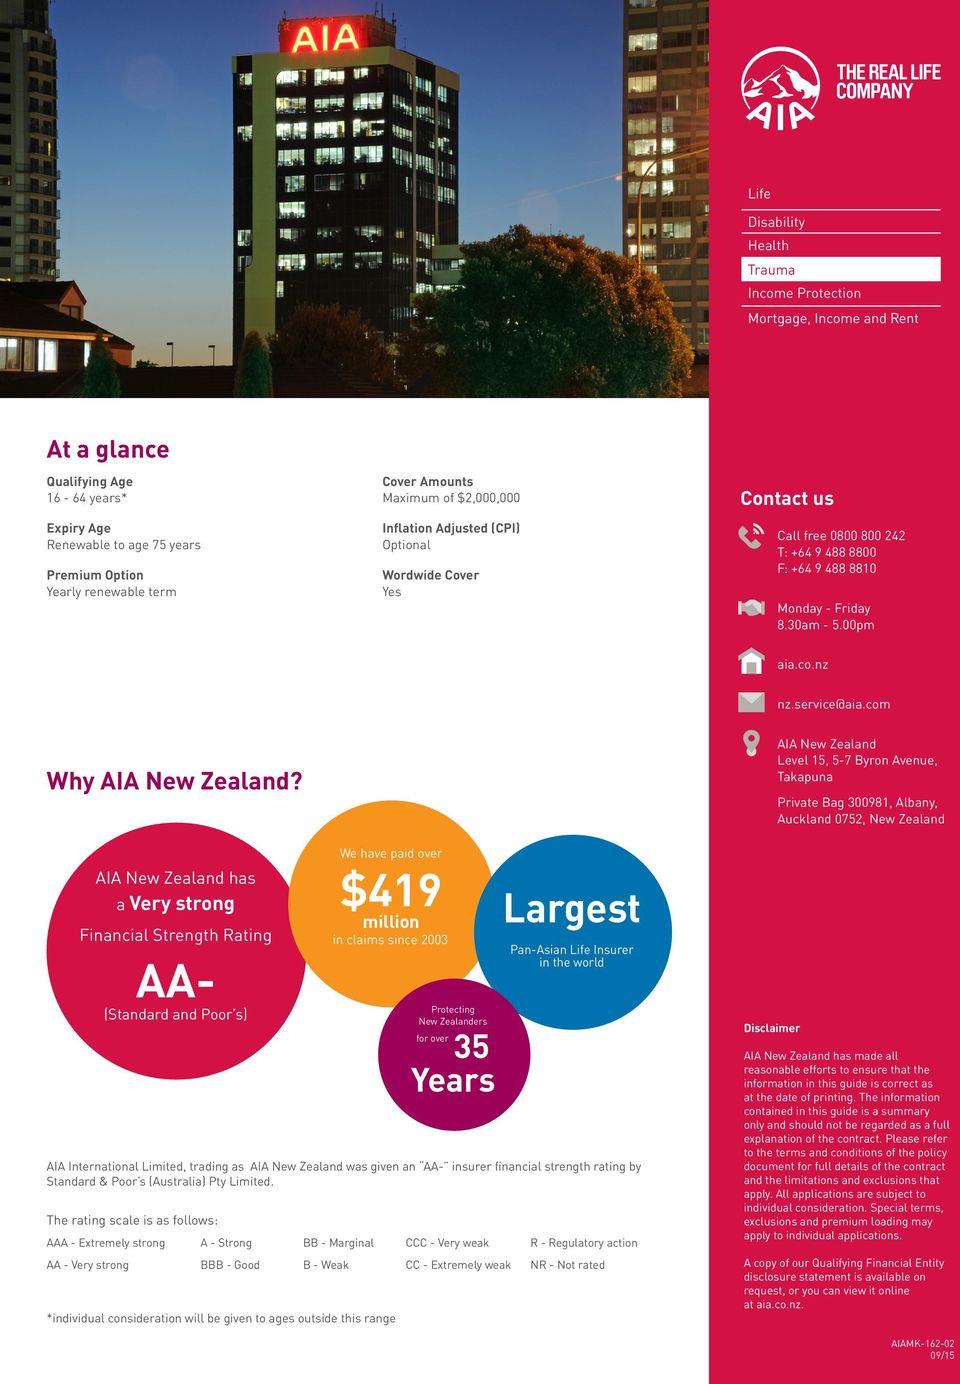 service@aia.com Why AIA New Zealand?